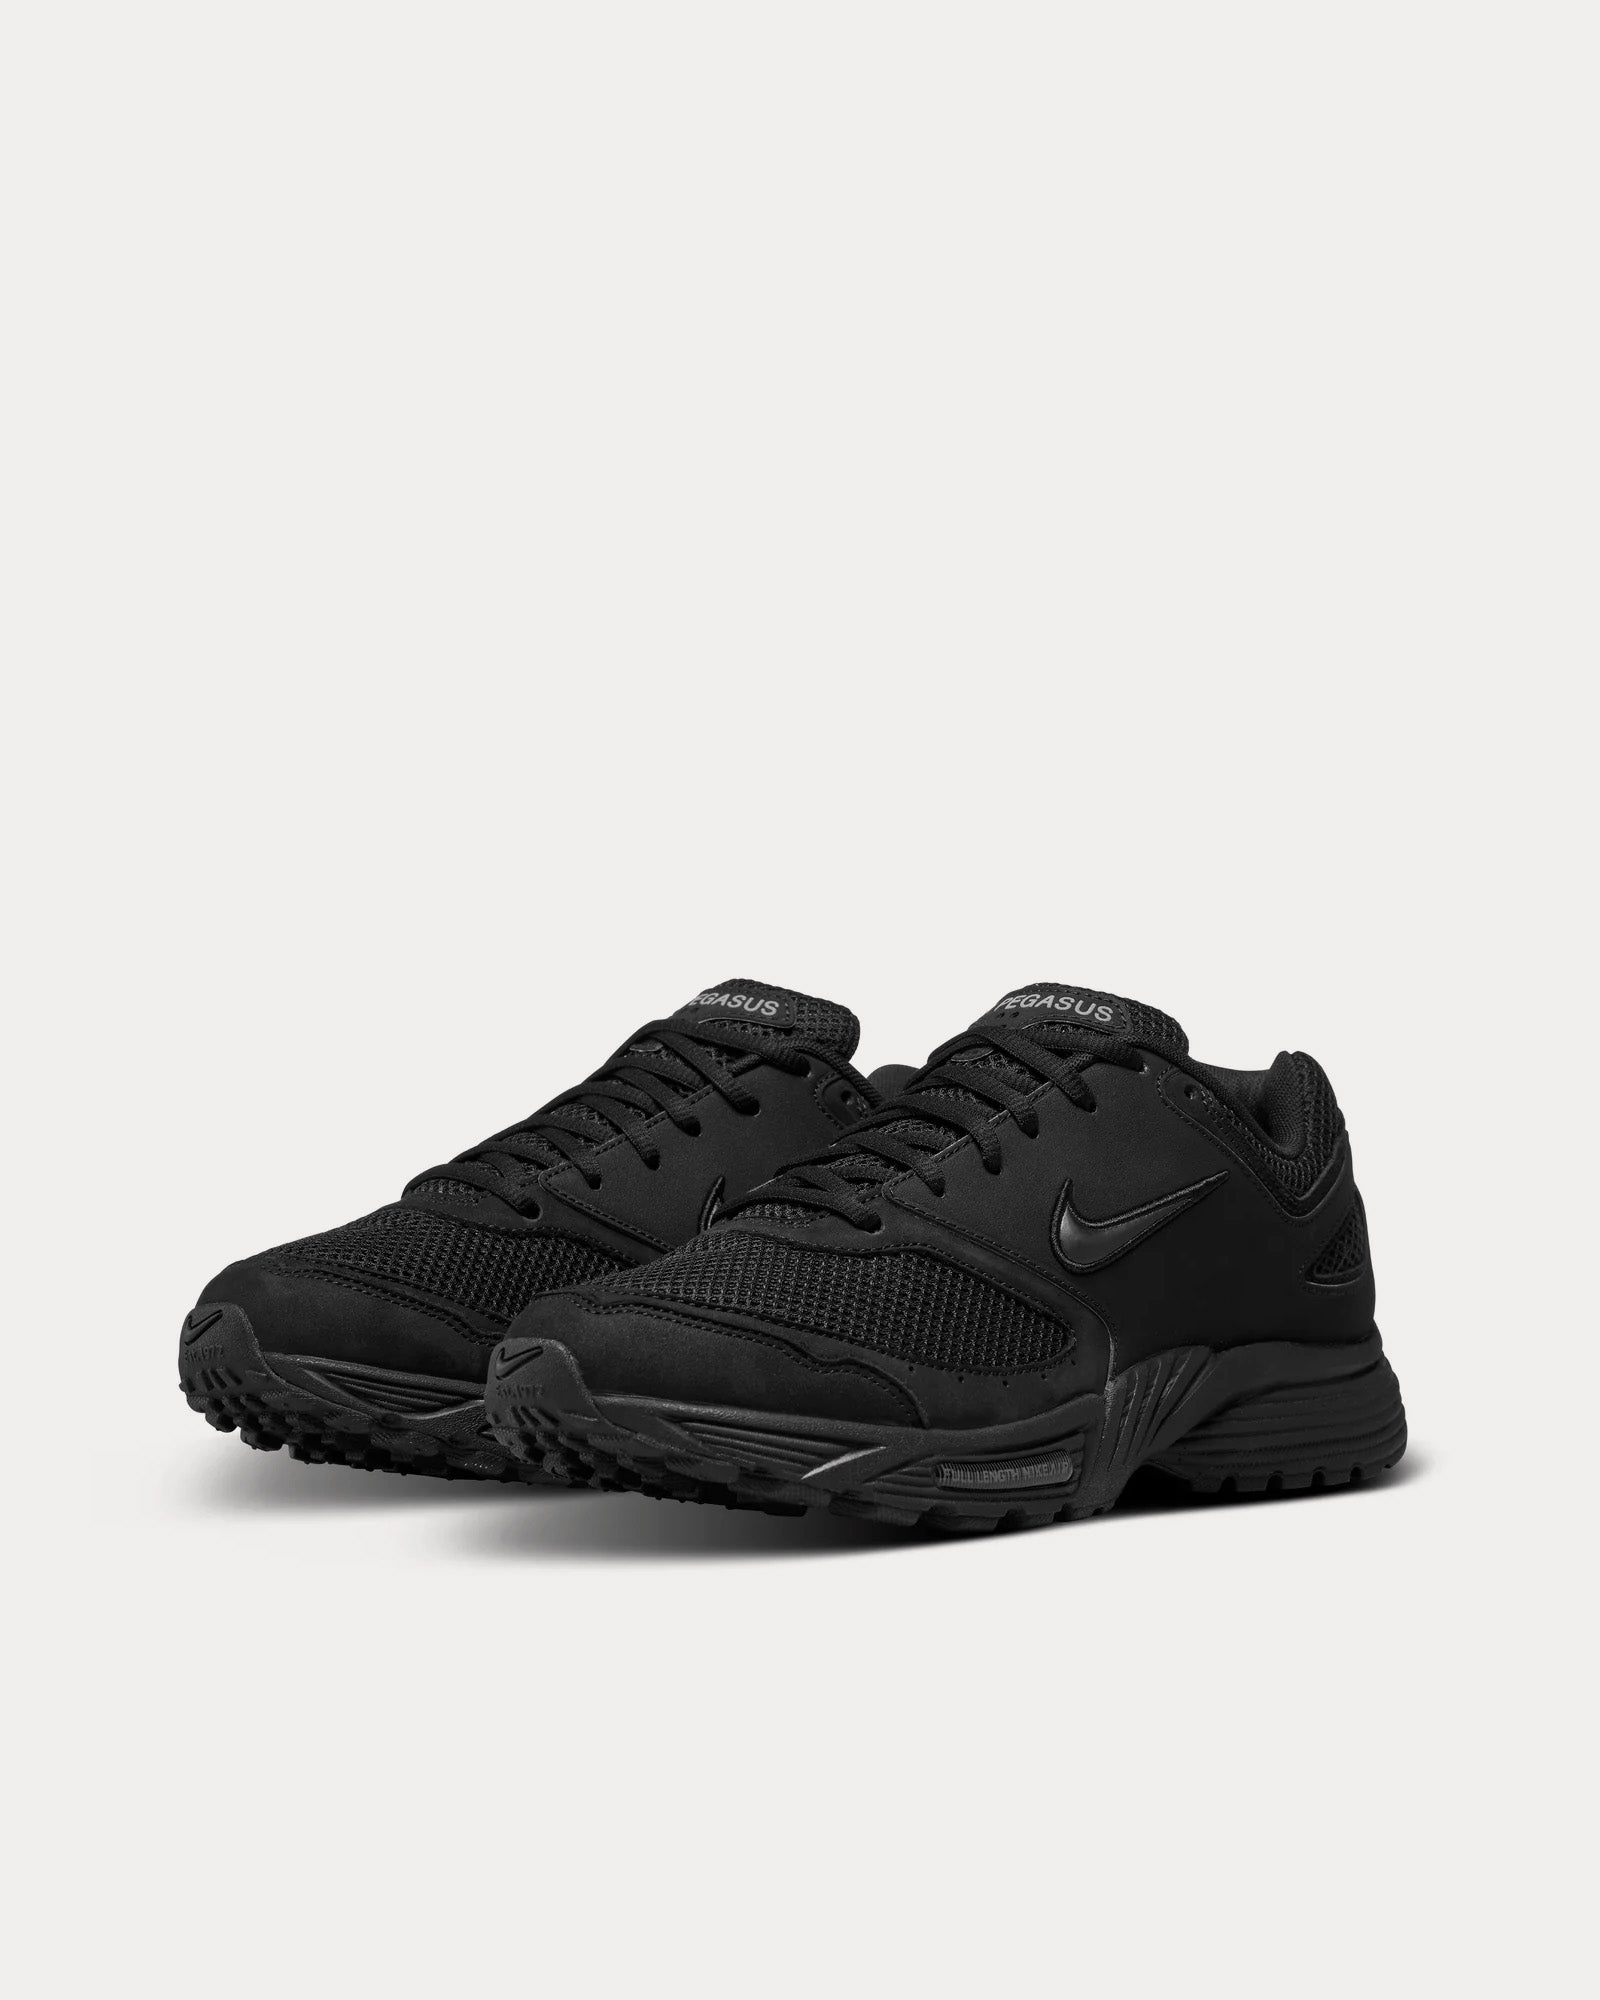 Nike x Comme des Garçons - Air Pegasus 2005 Black Low Top Sneakers